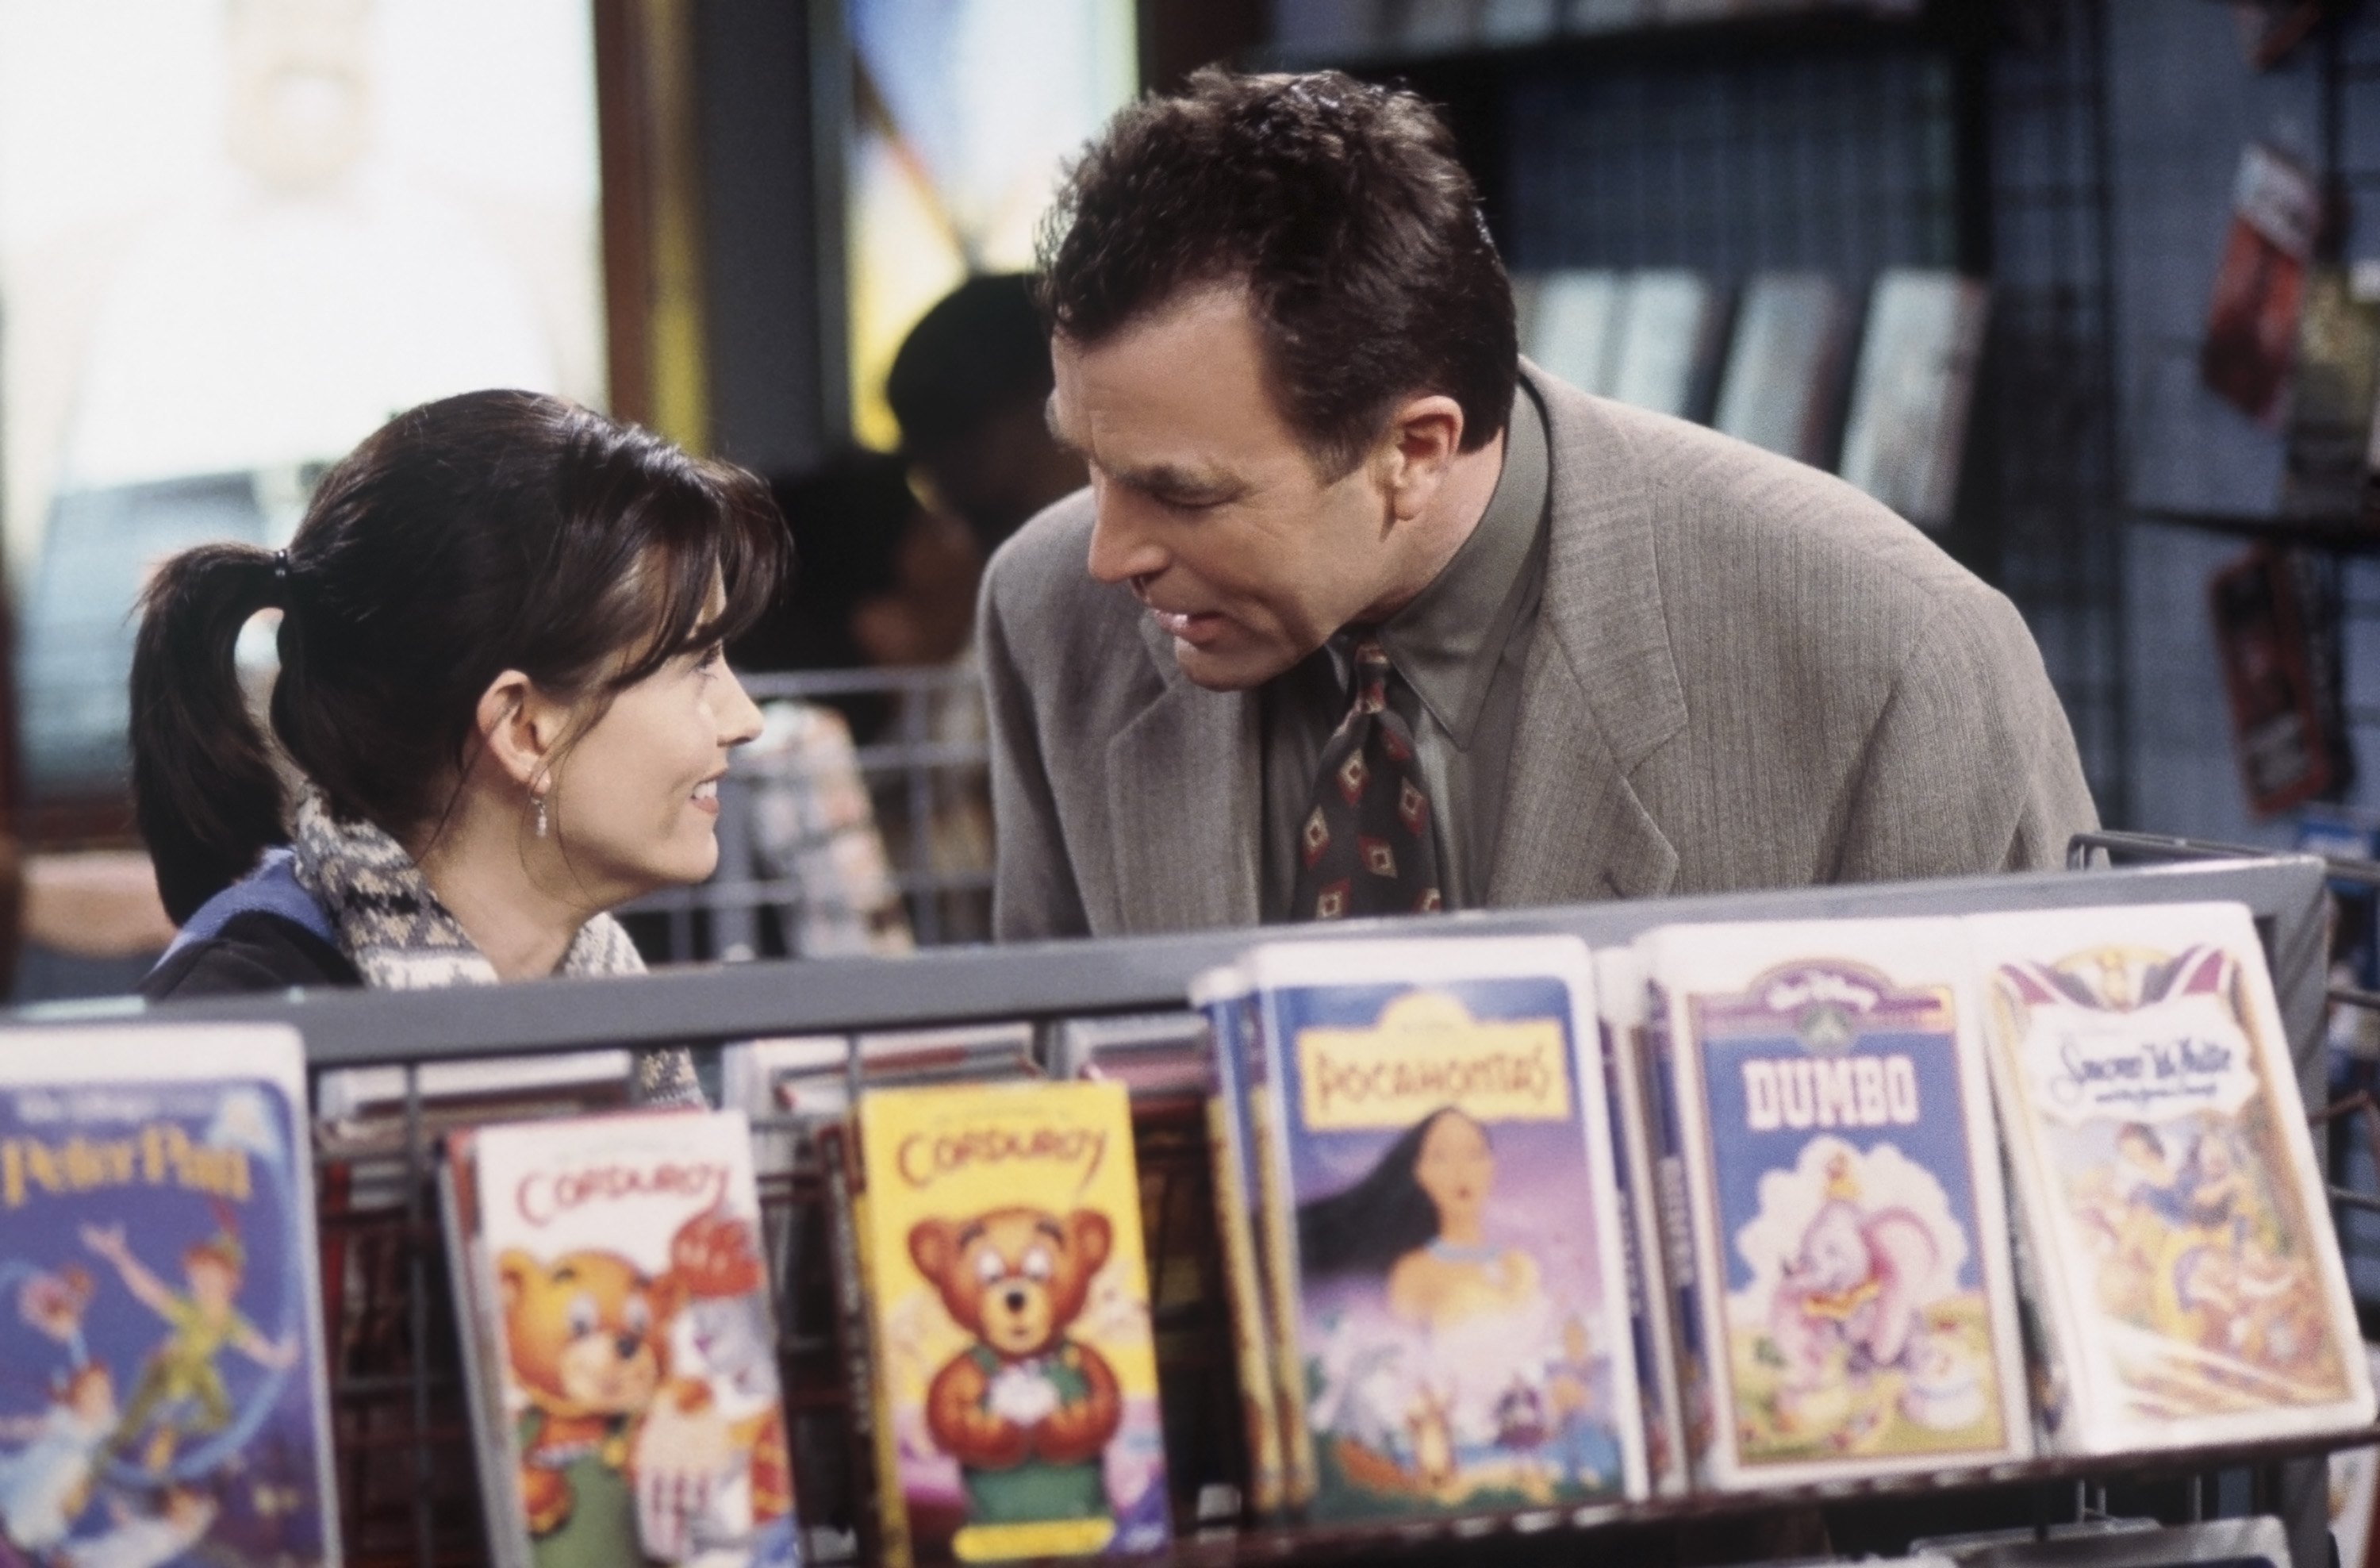 Monica Geller runs into Richard Burke after their breakup in the video rental store